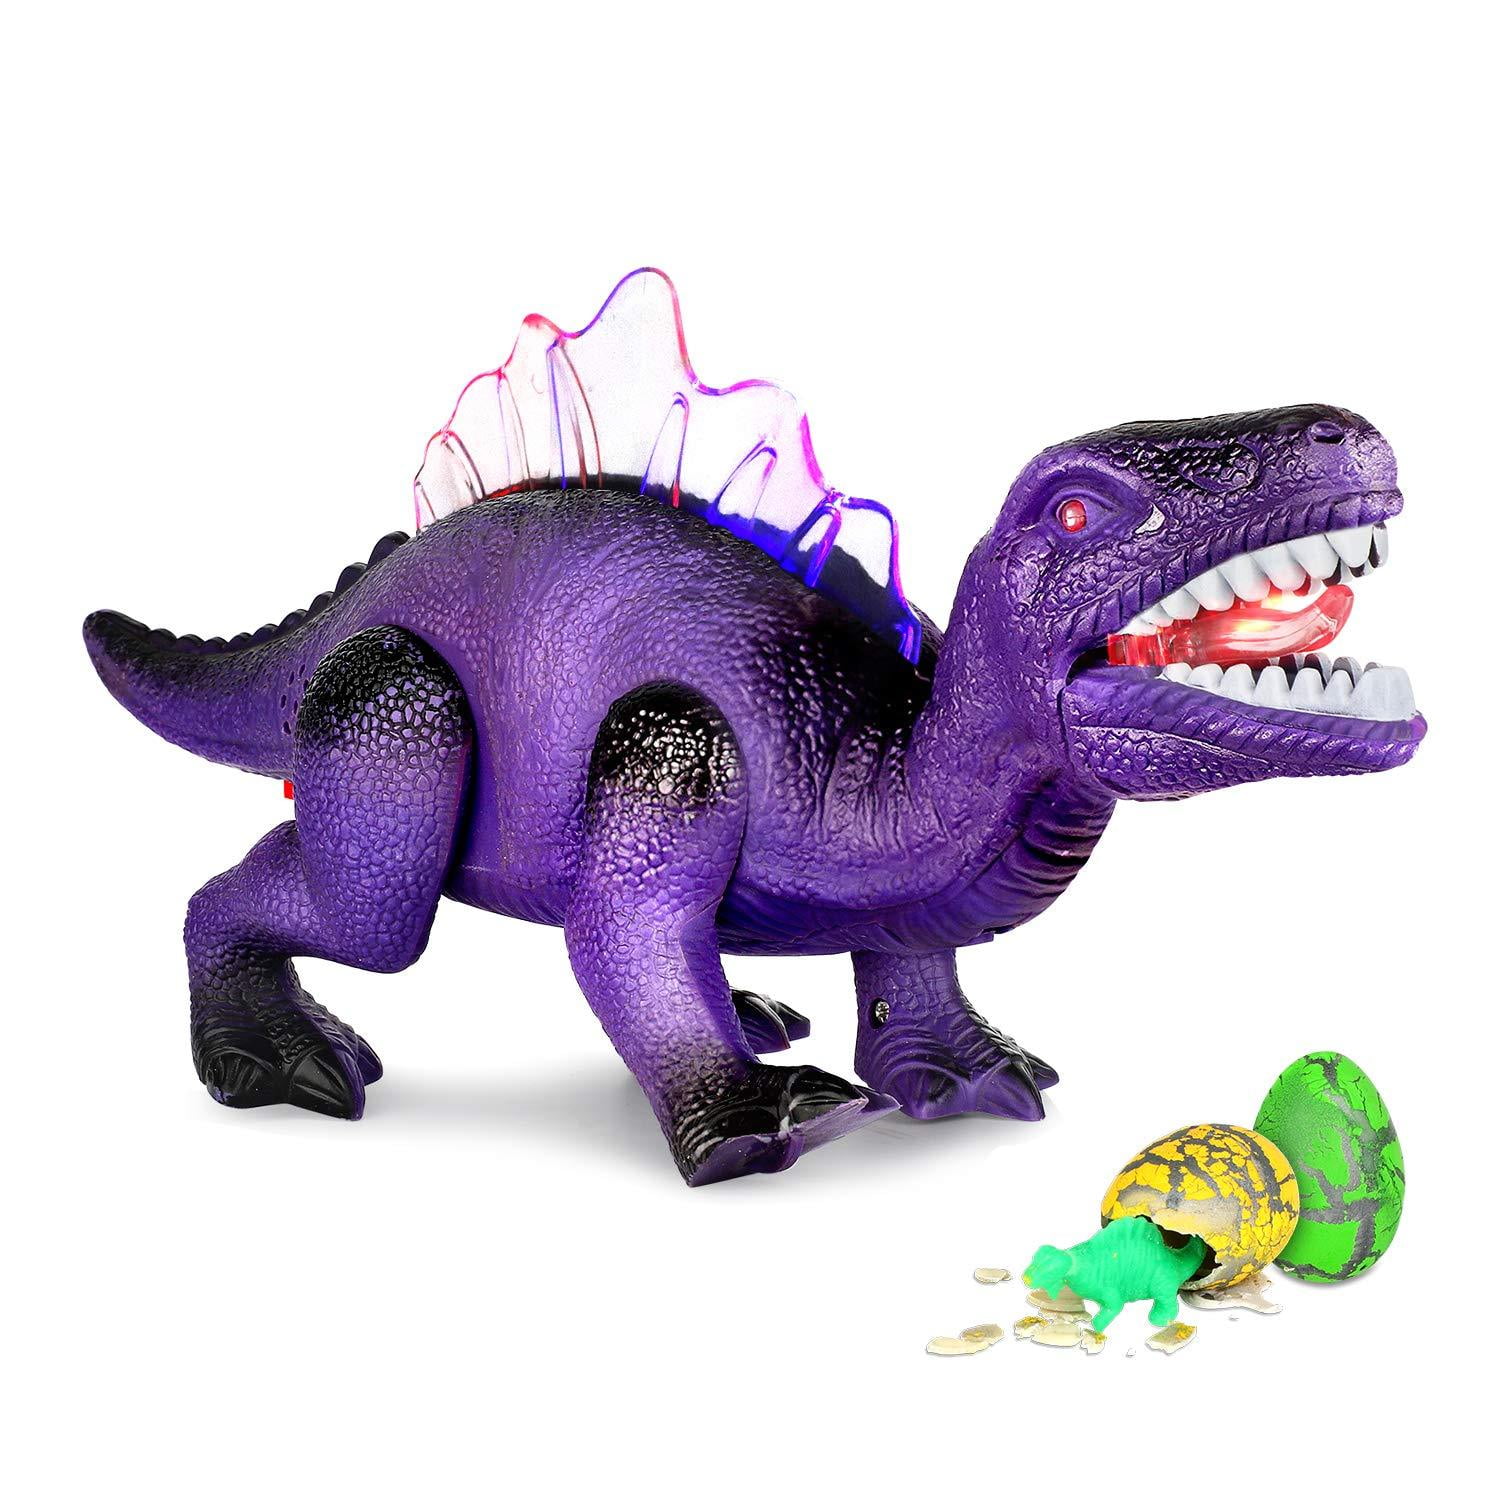 Super Joy Dinosaurs Toys for Kids [2 Extra Dinosaur Eggs] Electric